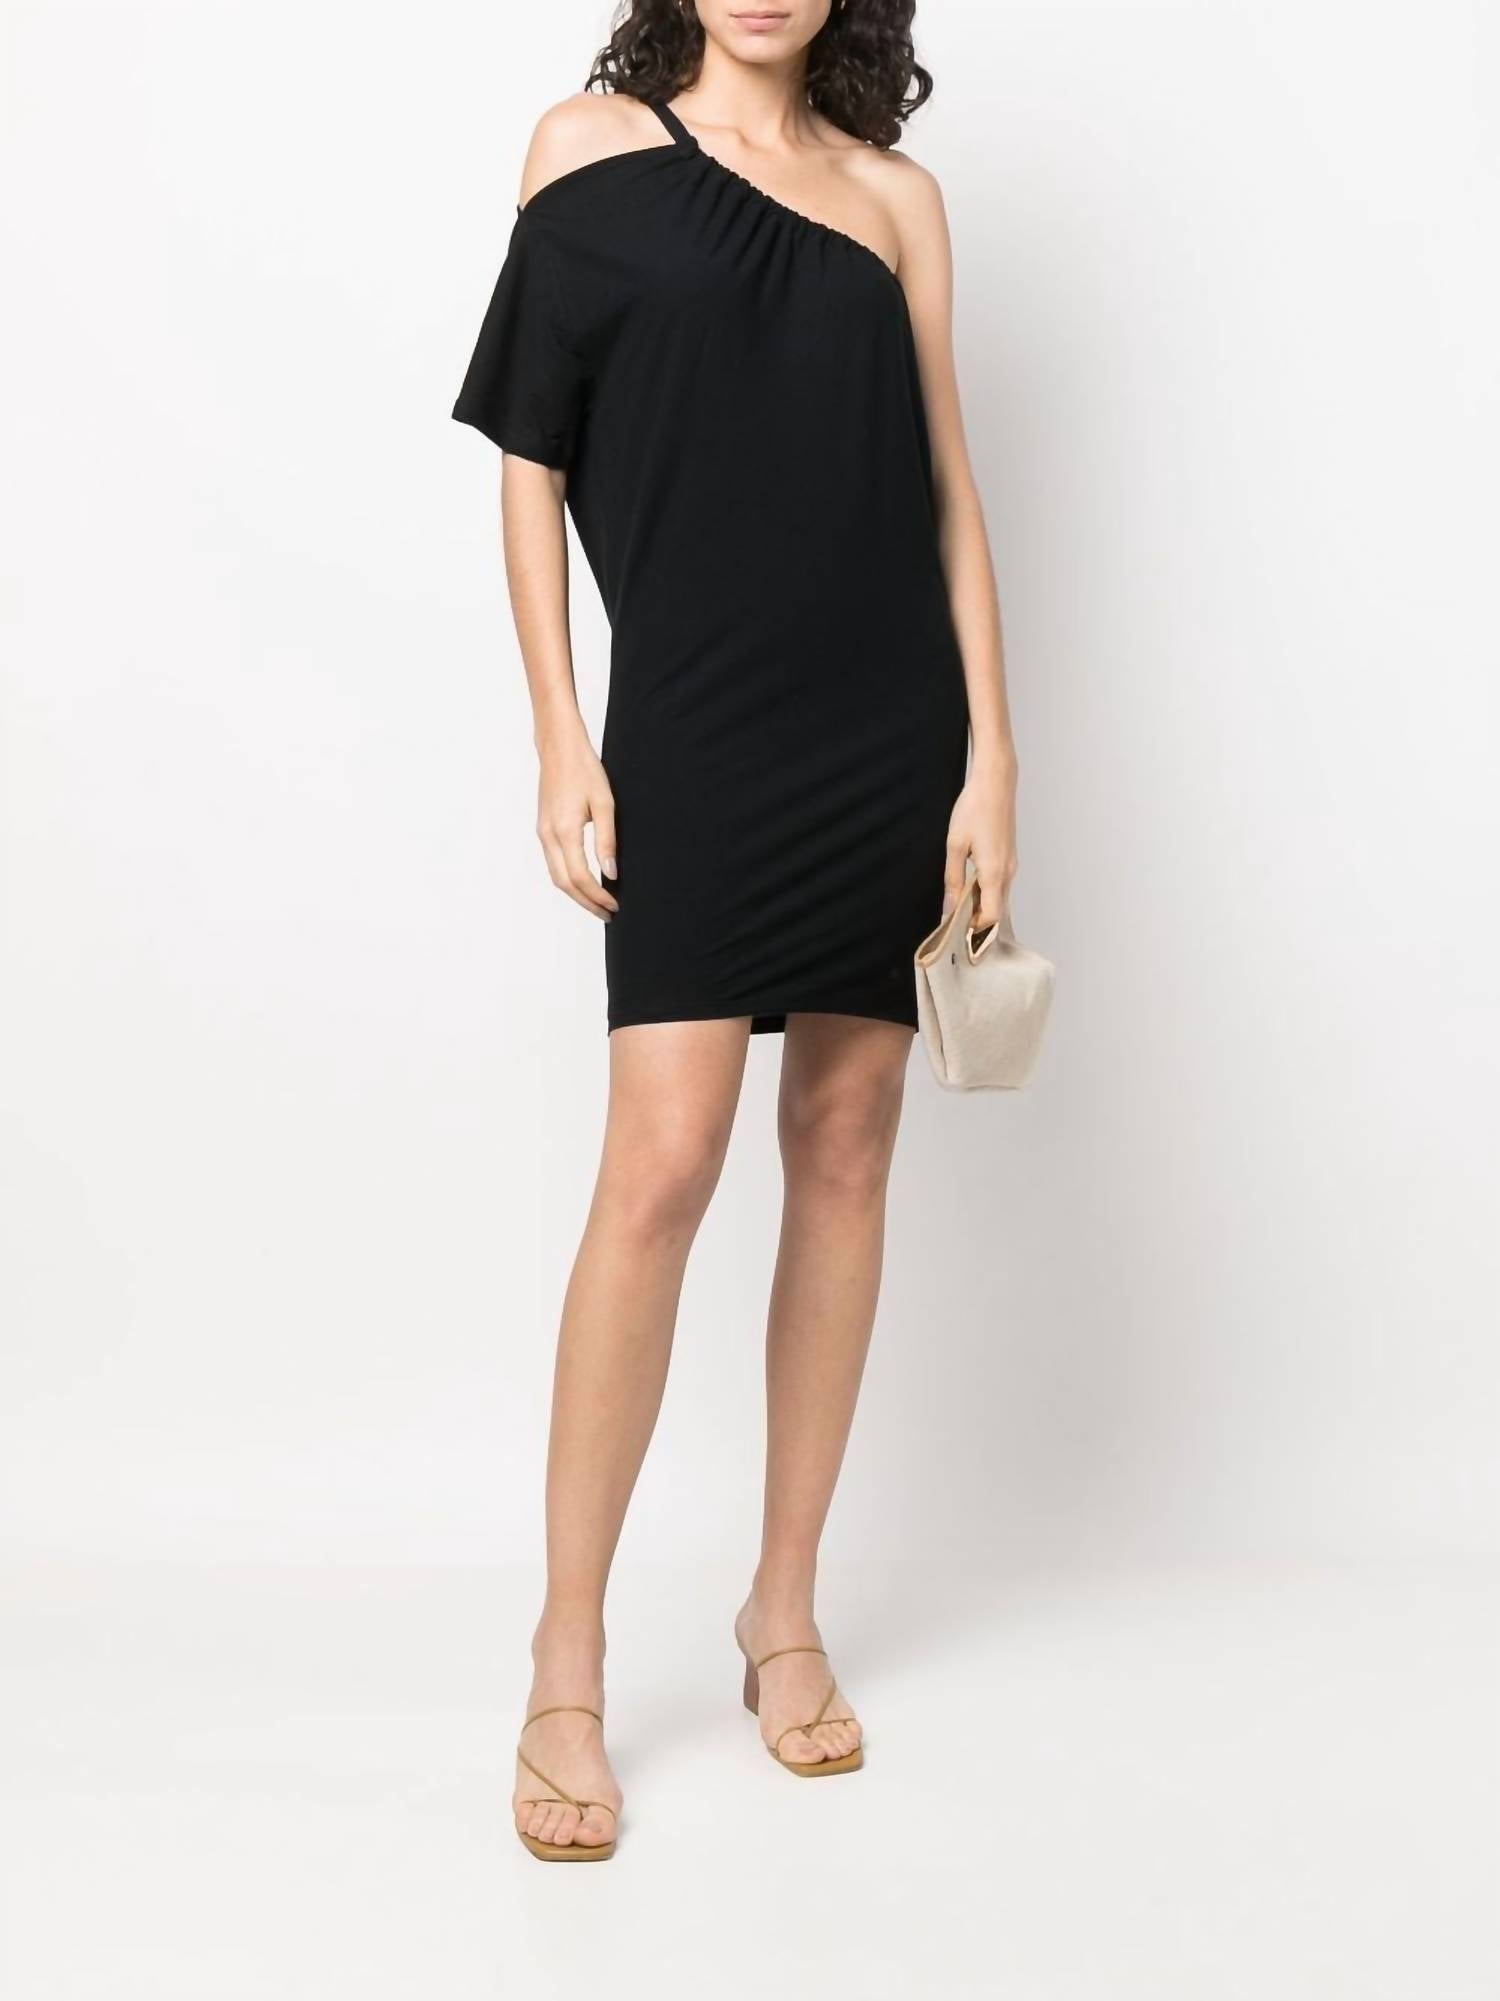 IRO Handra One-Shoulder Dress in Black